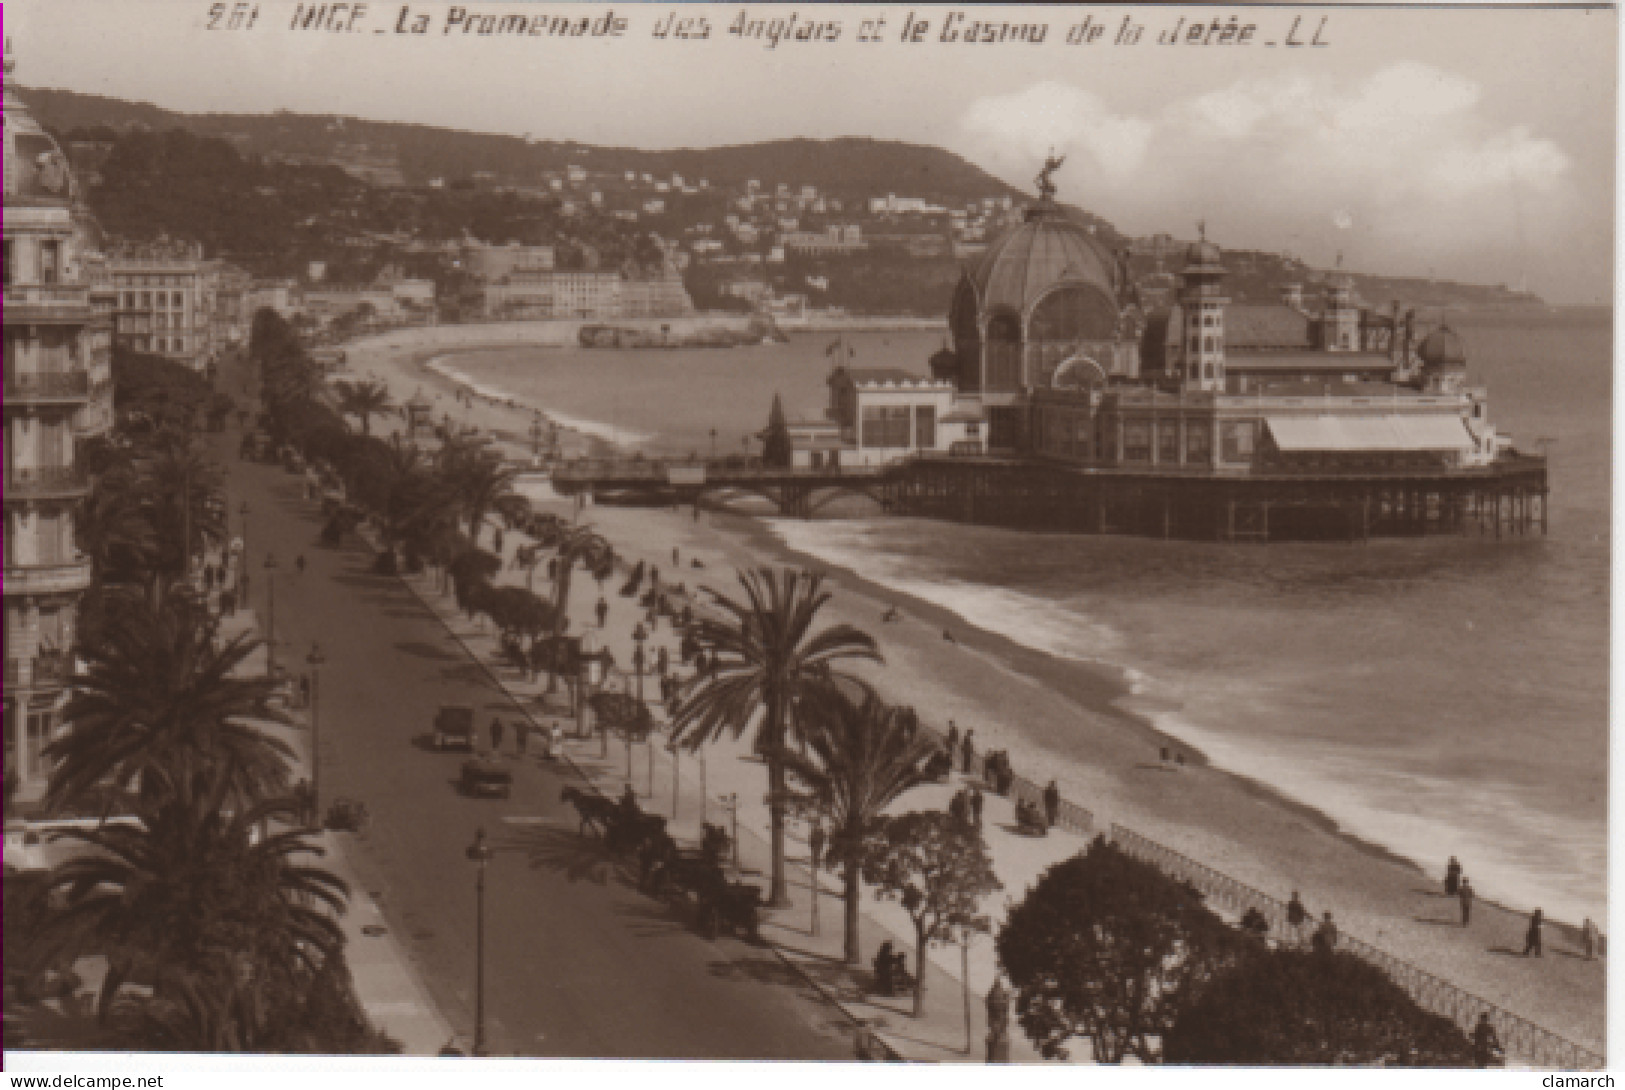 ALPES MARITIMES-Nice-La Promenade Des Anglais Et Le Casino De La Jetée - LL 261 - Bauwerke, Gebäude